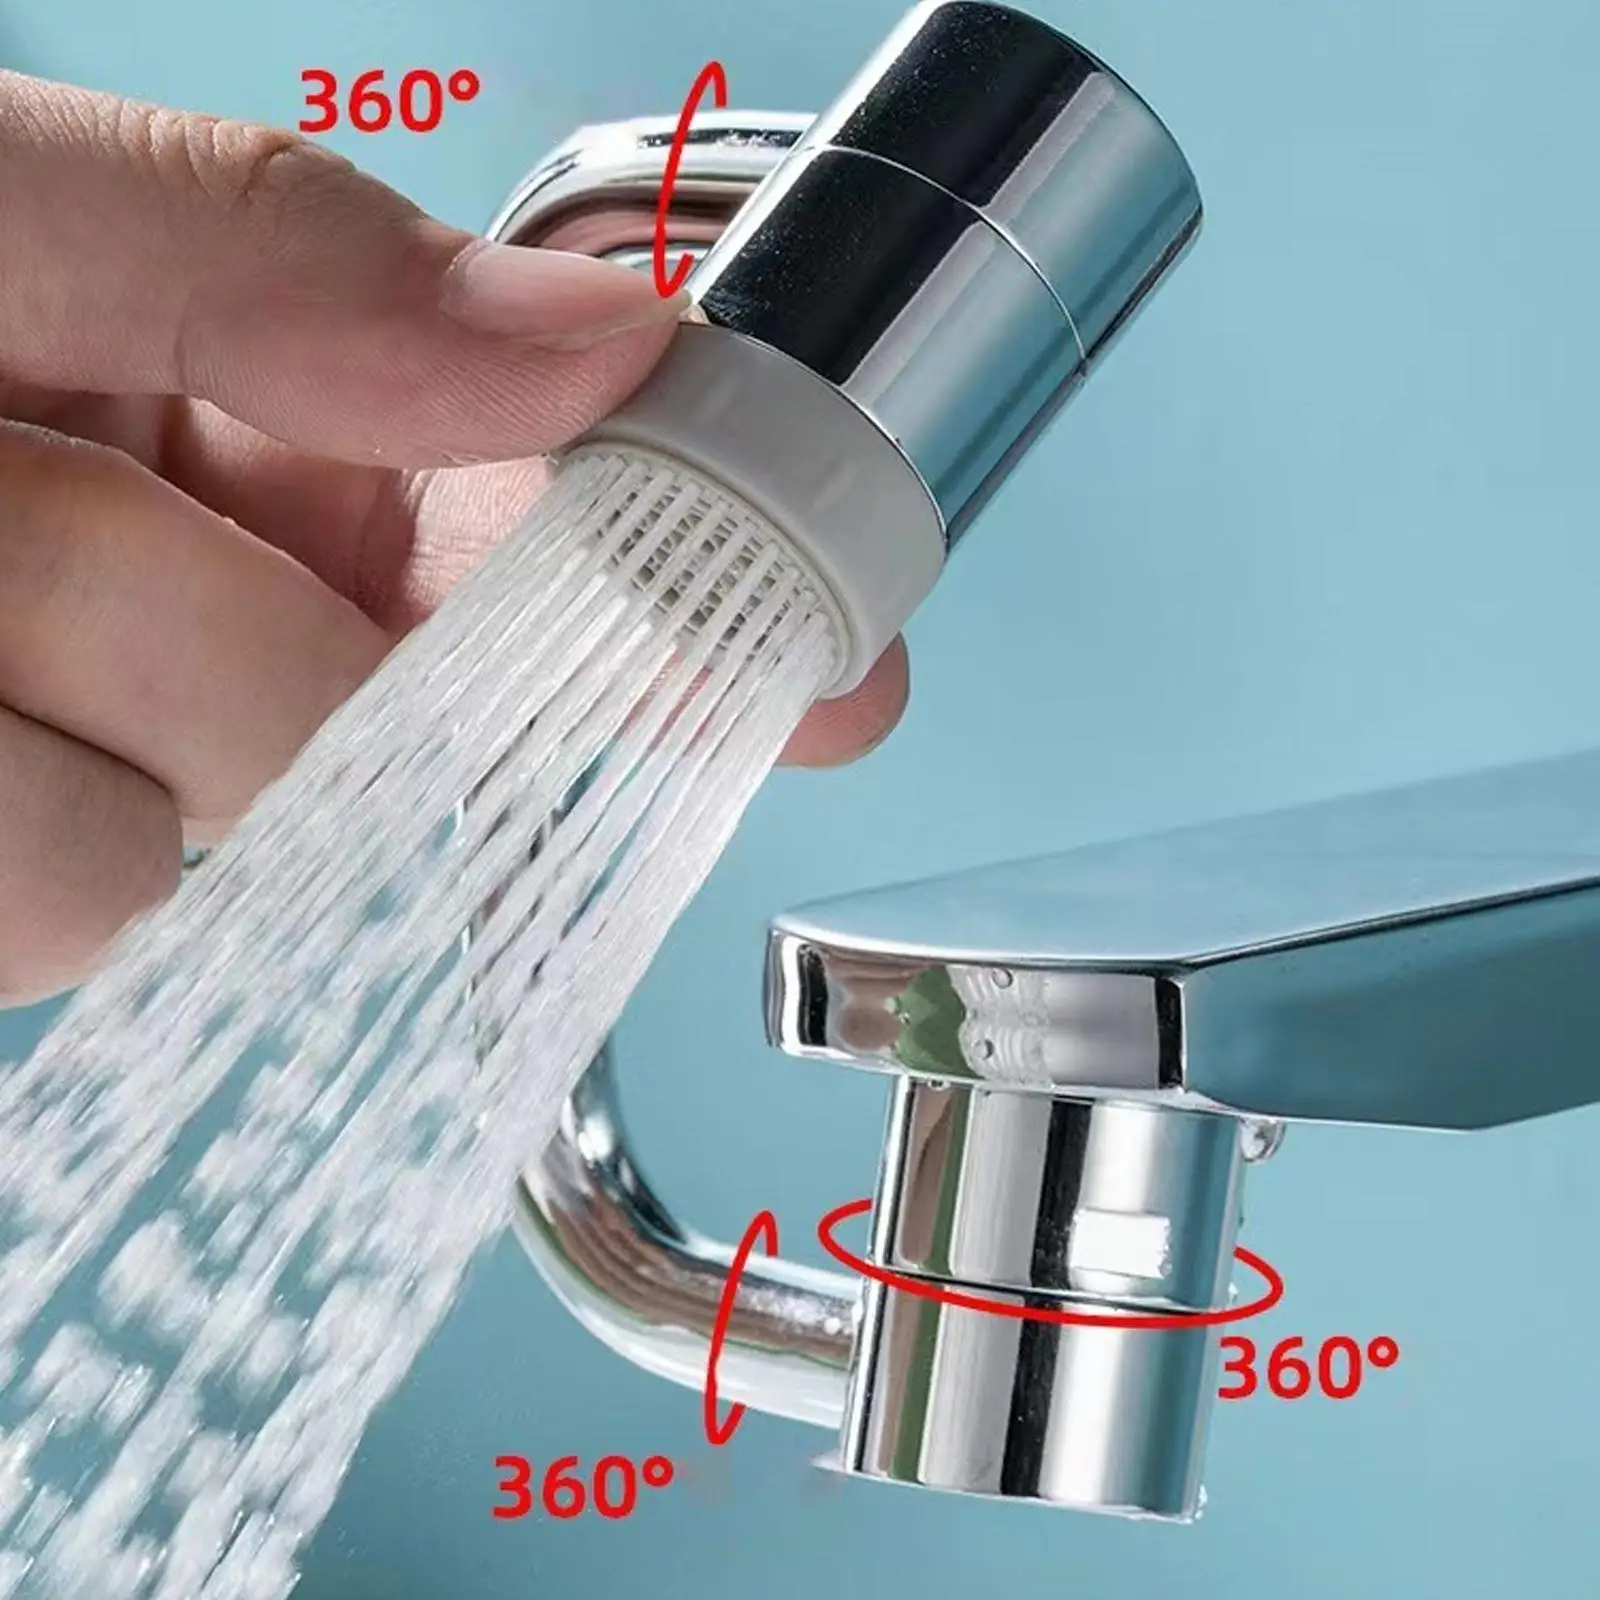 

Universal 1080 Rotation Extender Faucet Kitchen Faucet Sprayer Faucet Sink Replacement Arm Robotic Sprayer Swivel J2l5